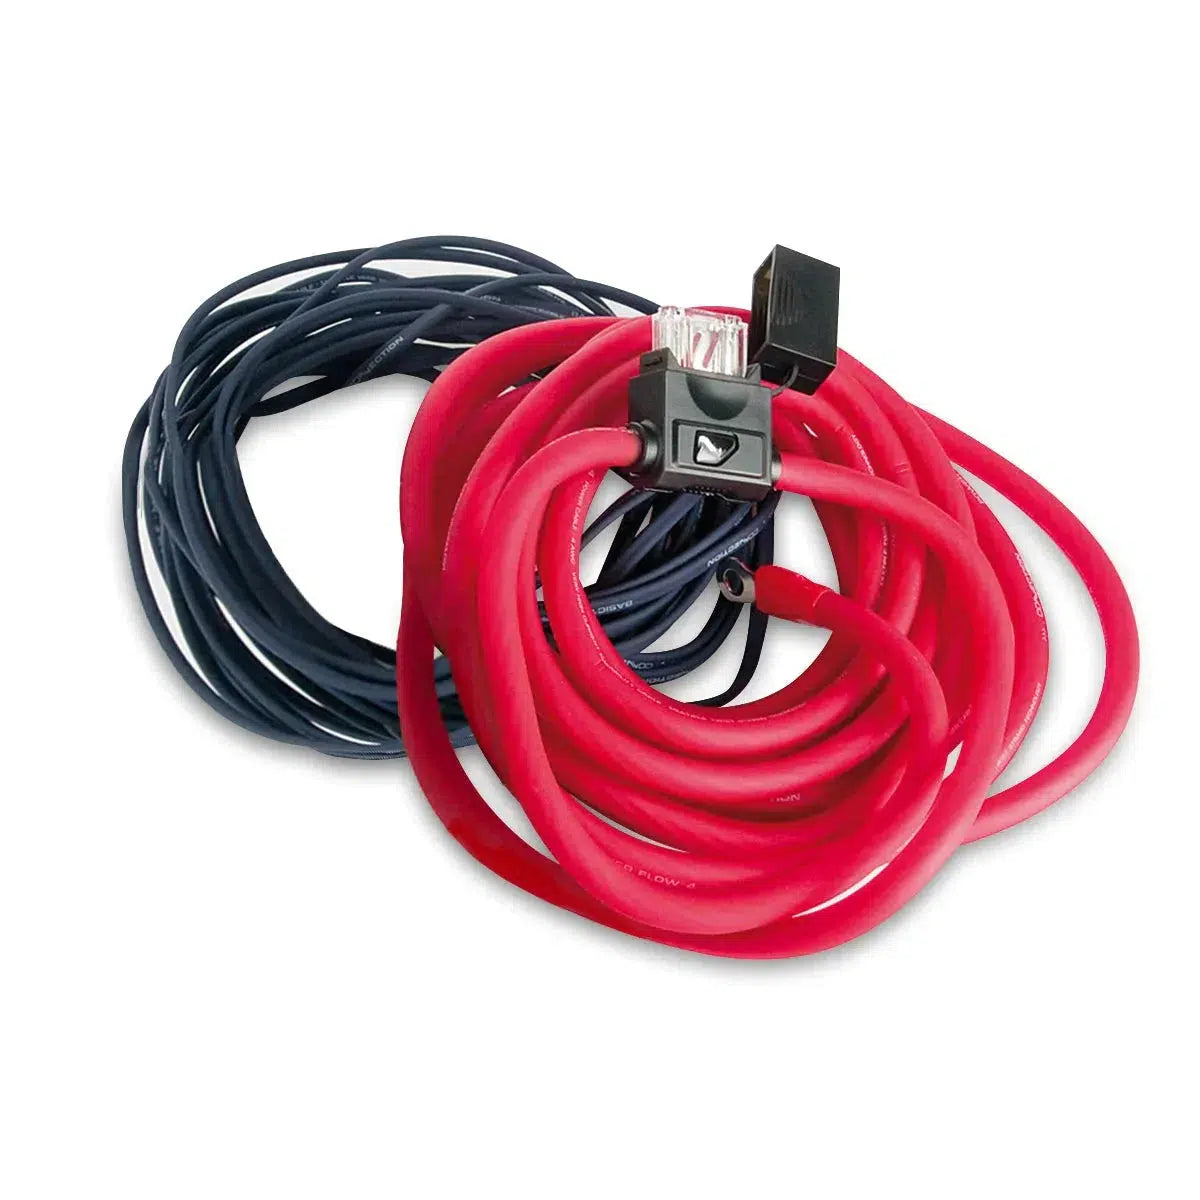 Audison Connection-First FPK 700.1-20mm² power cable-Masori.de